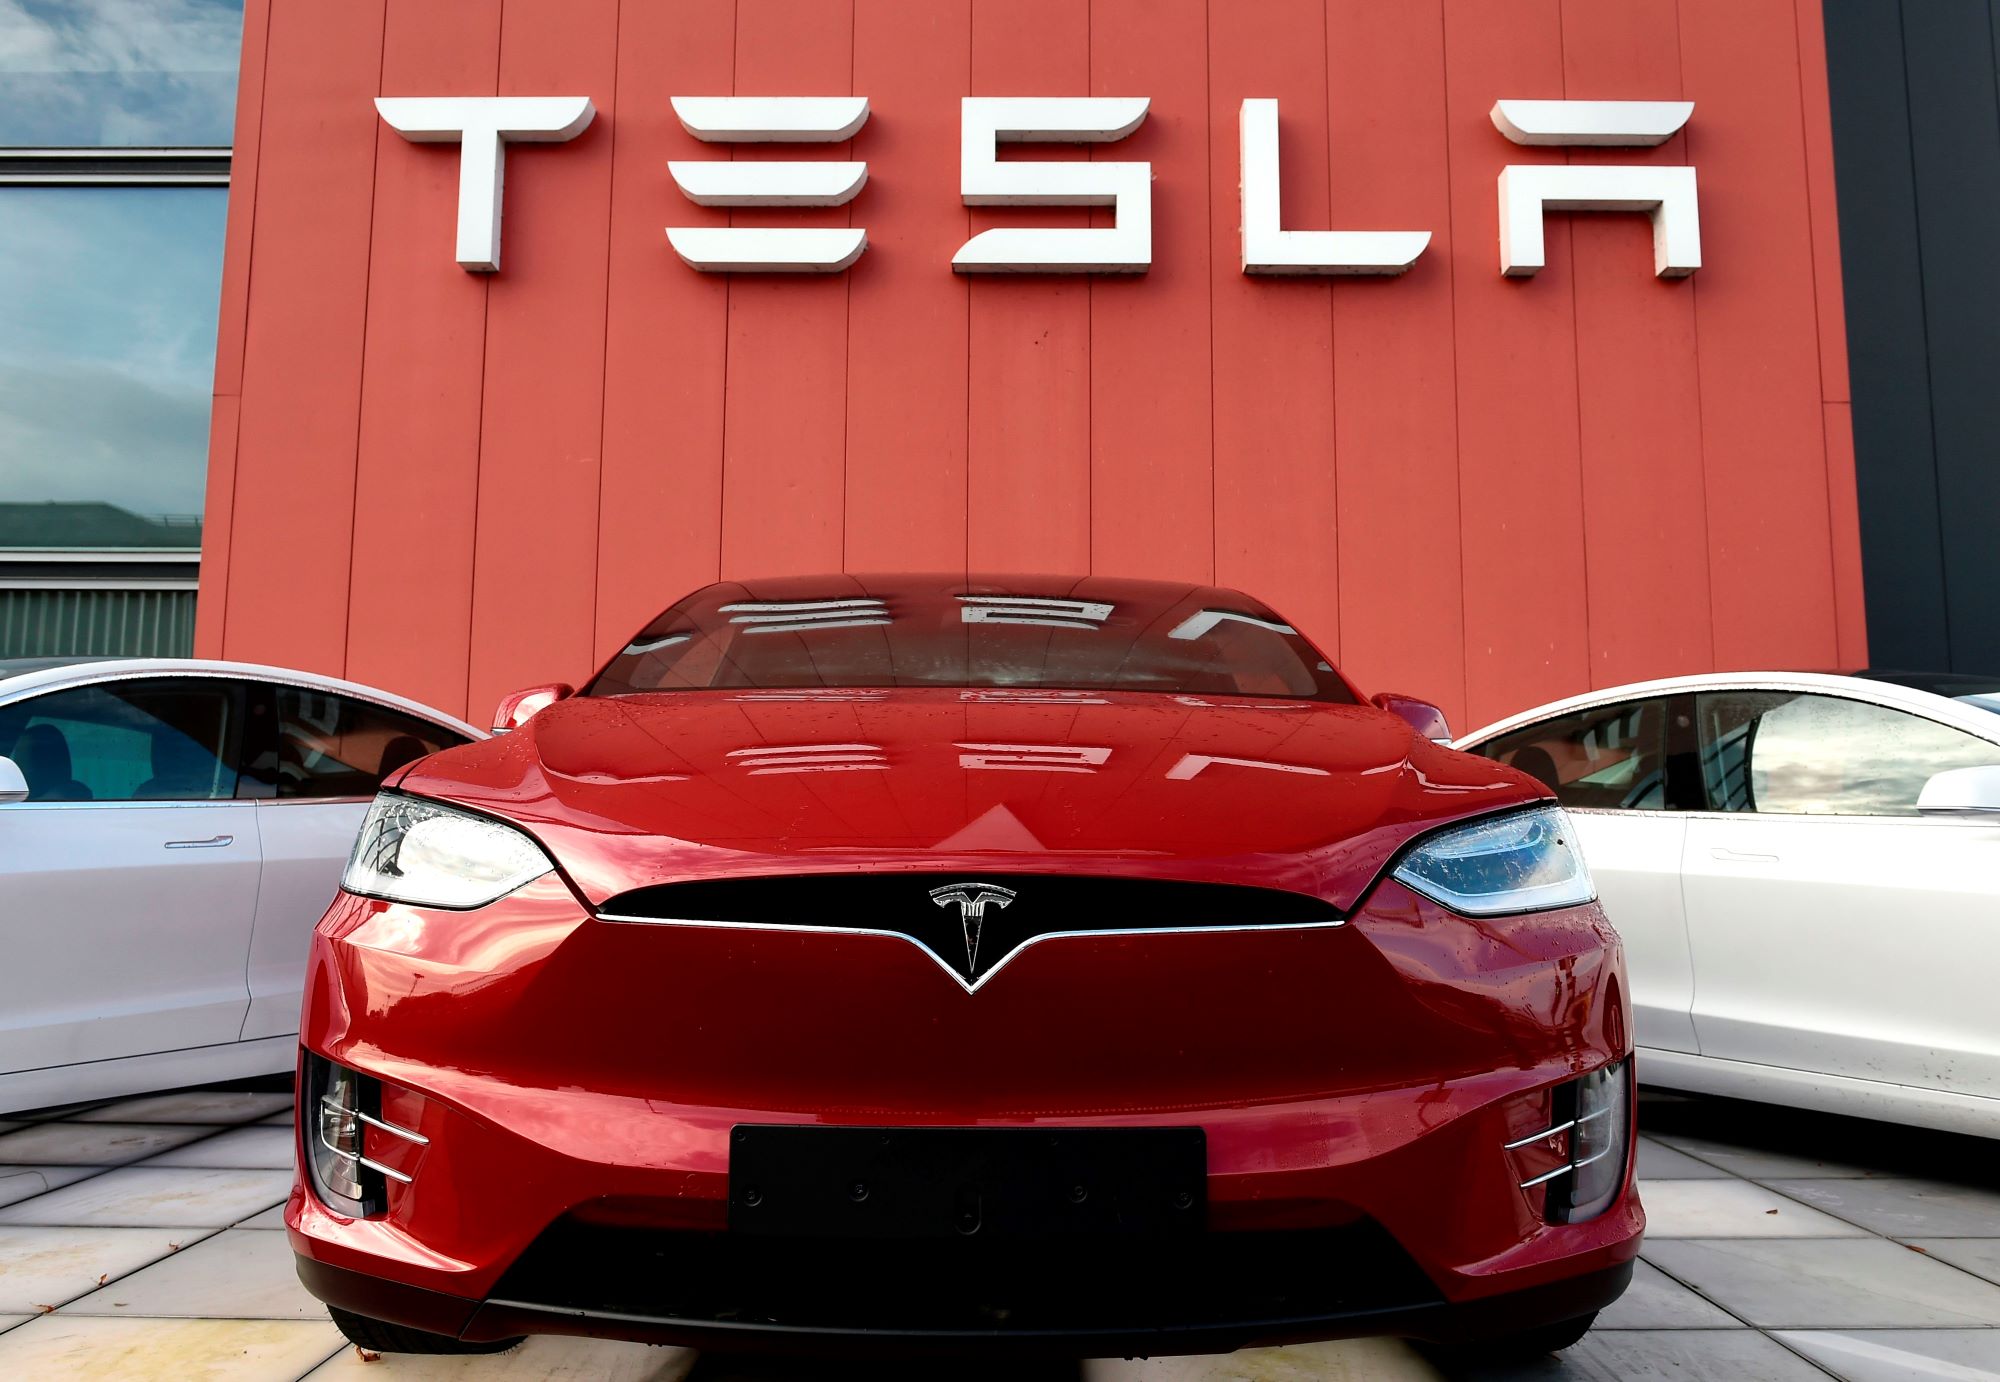 sensor Traktor indenlandske How Much Battery Loss Is Too Much According to Tesla's Warranty?